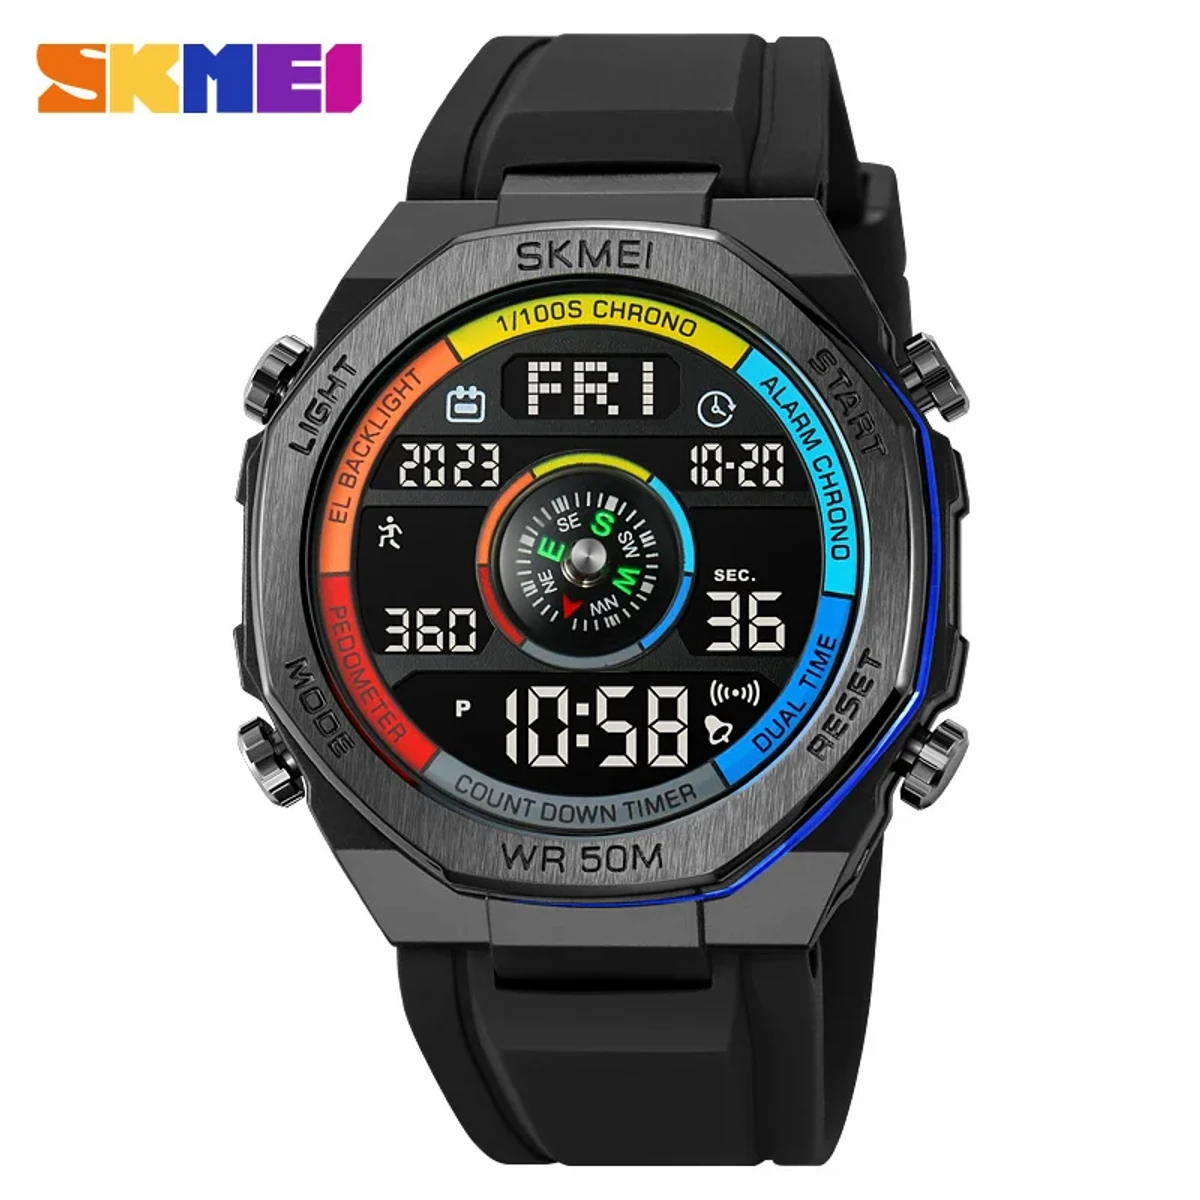 SKMEI Light Display Compass Sport Pedometer Countdown Digital Watch 50M waterproof